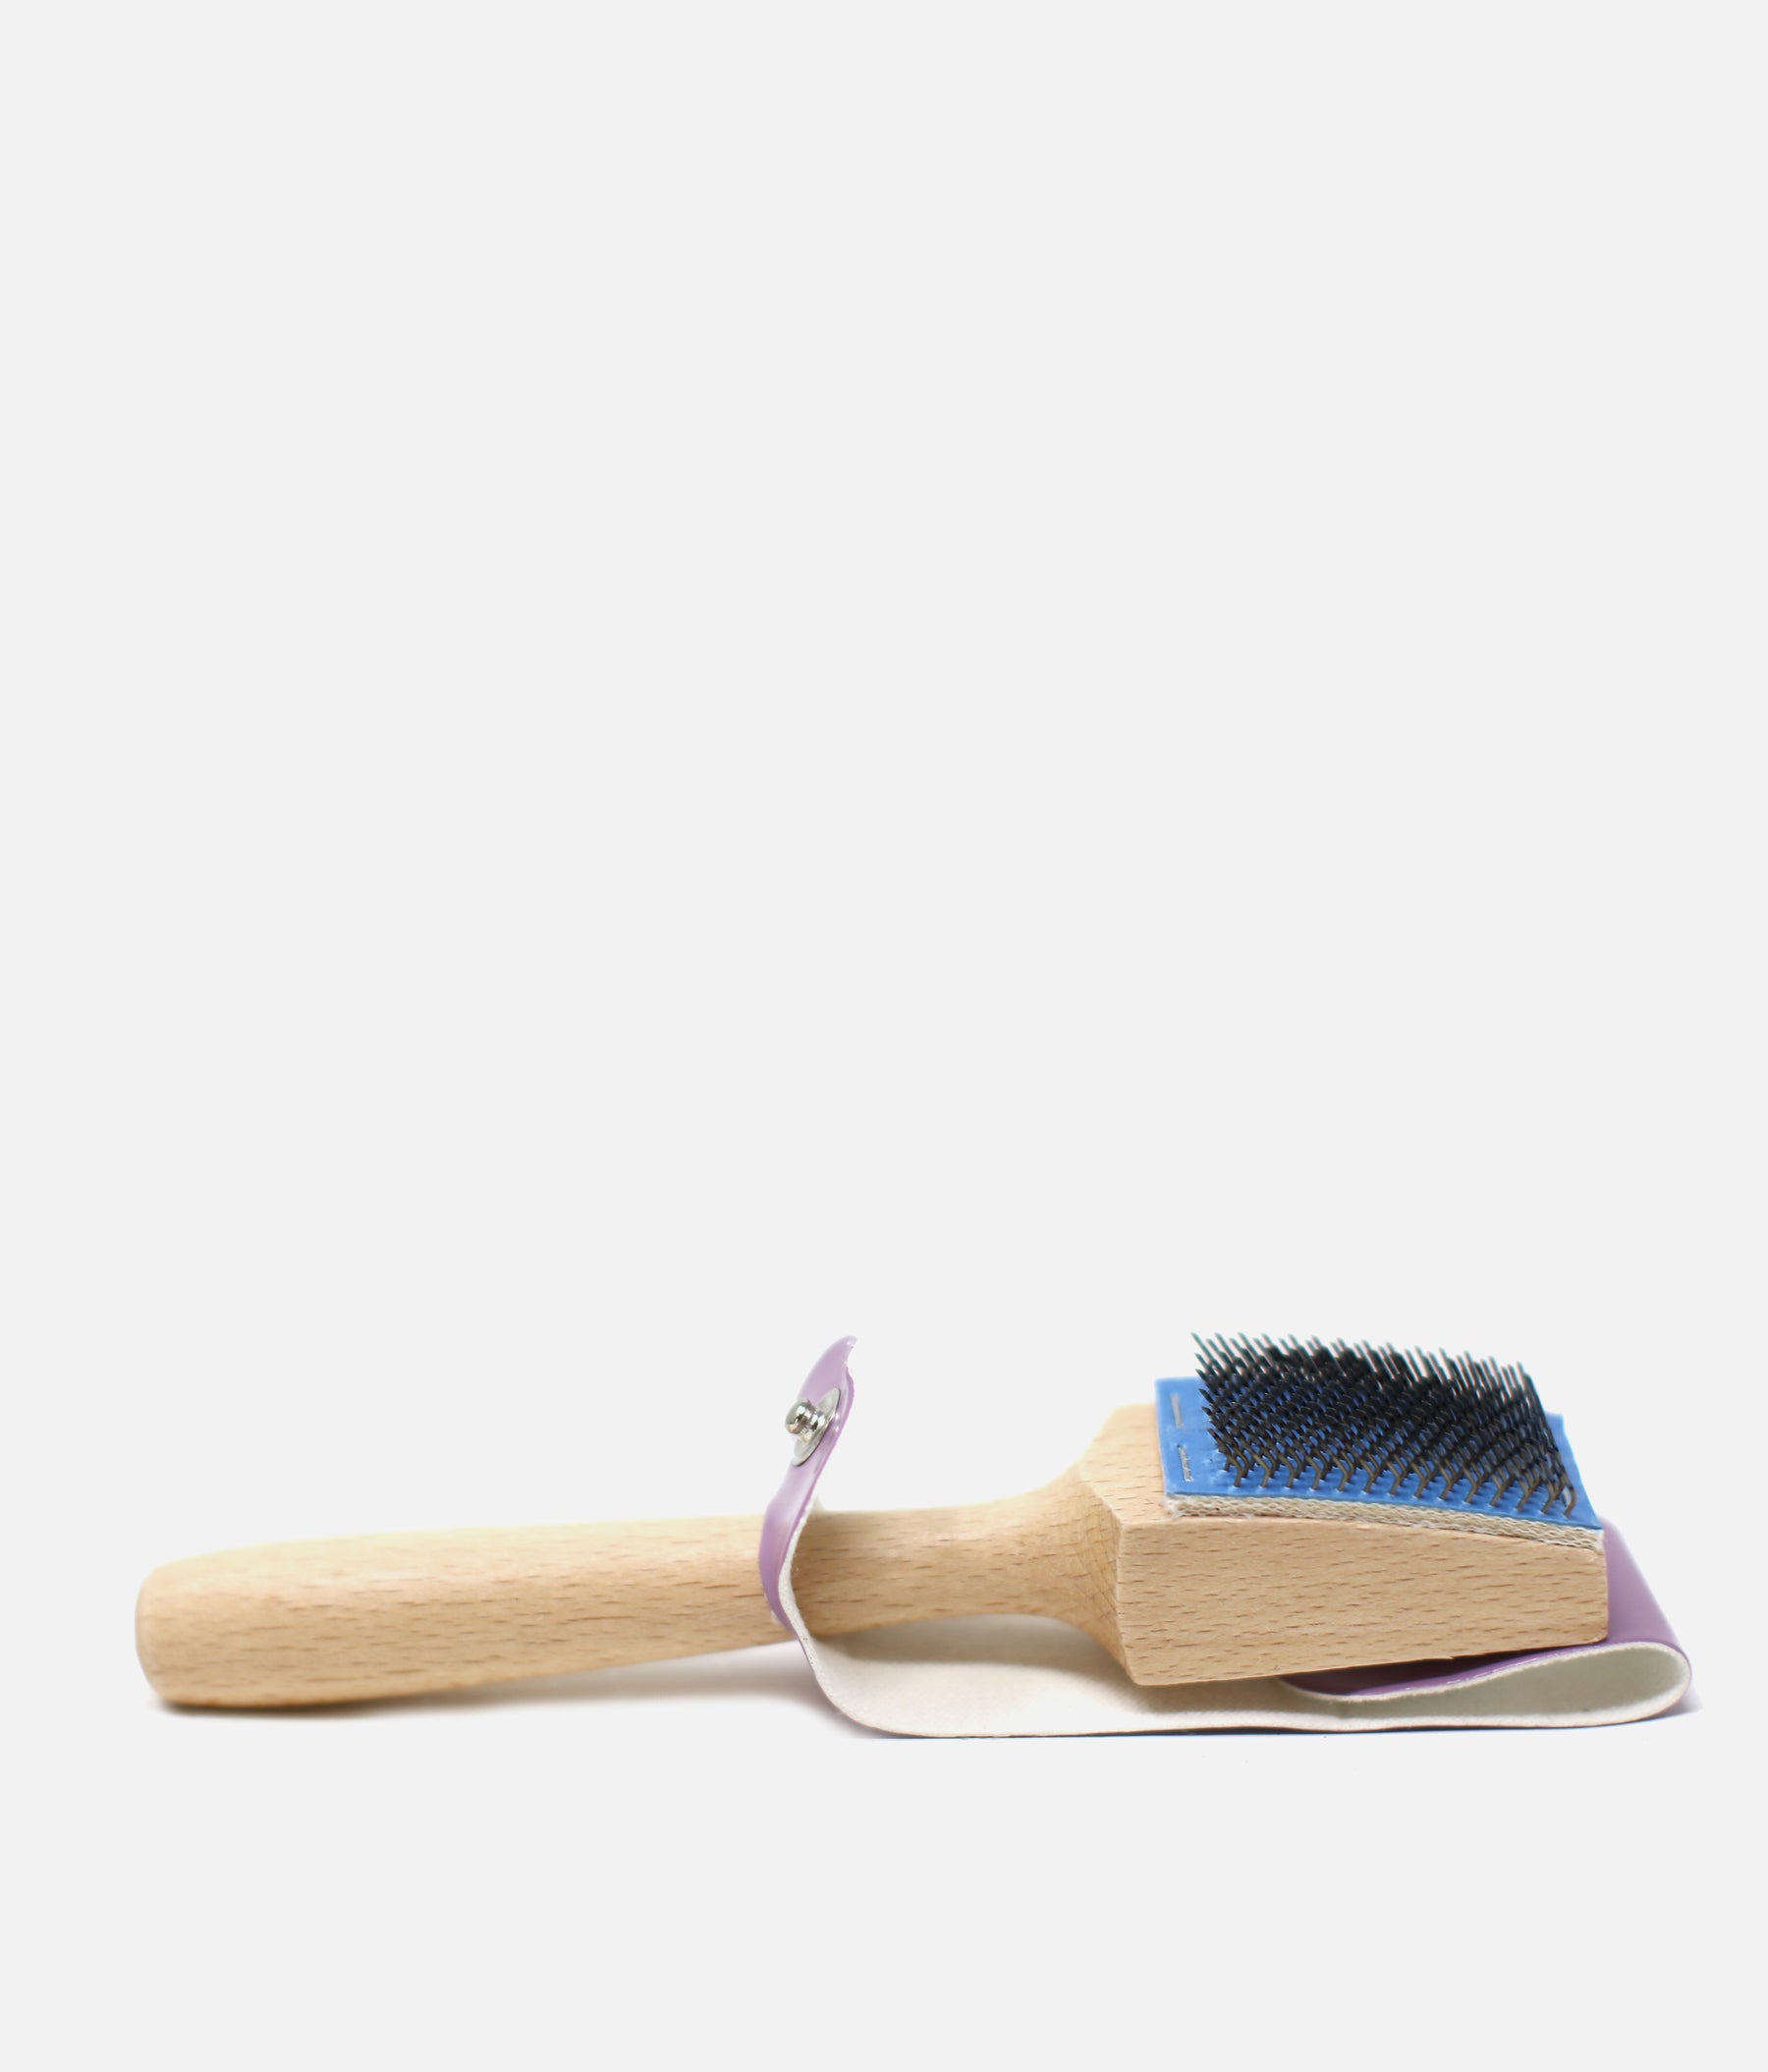 Shoe Brush - TH 019